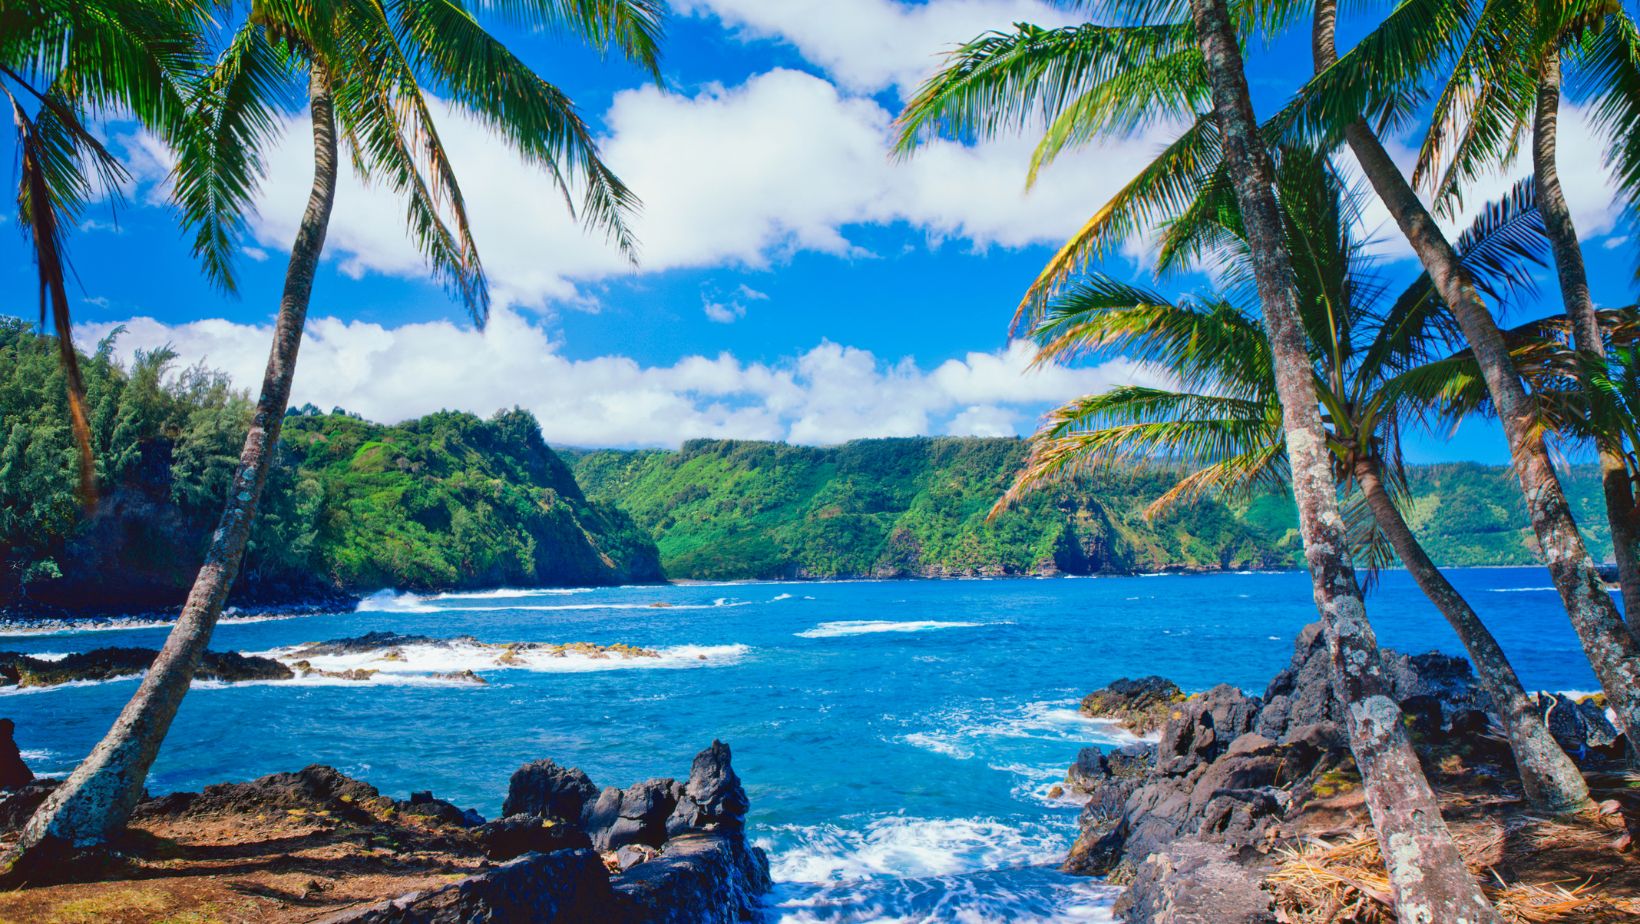 Top Hotel Picks for A Hawaiian Taste of Paradise